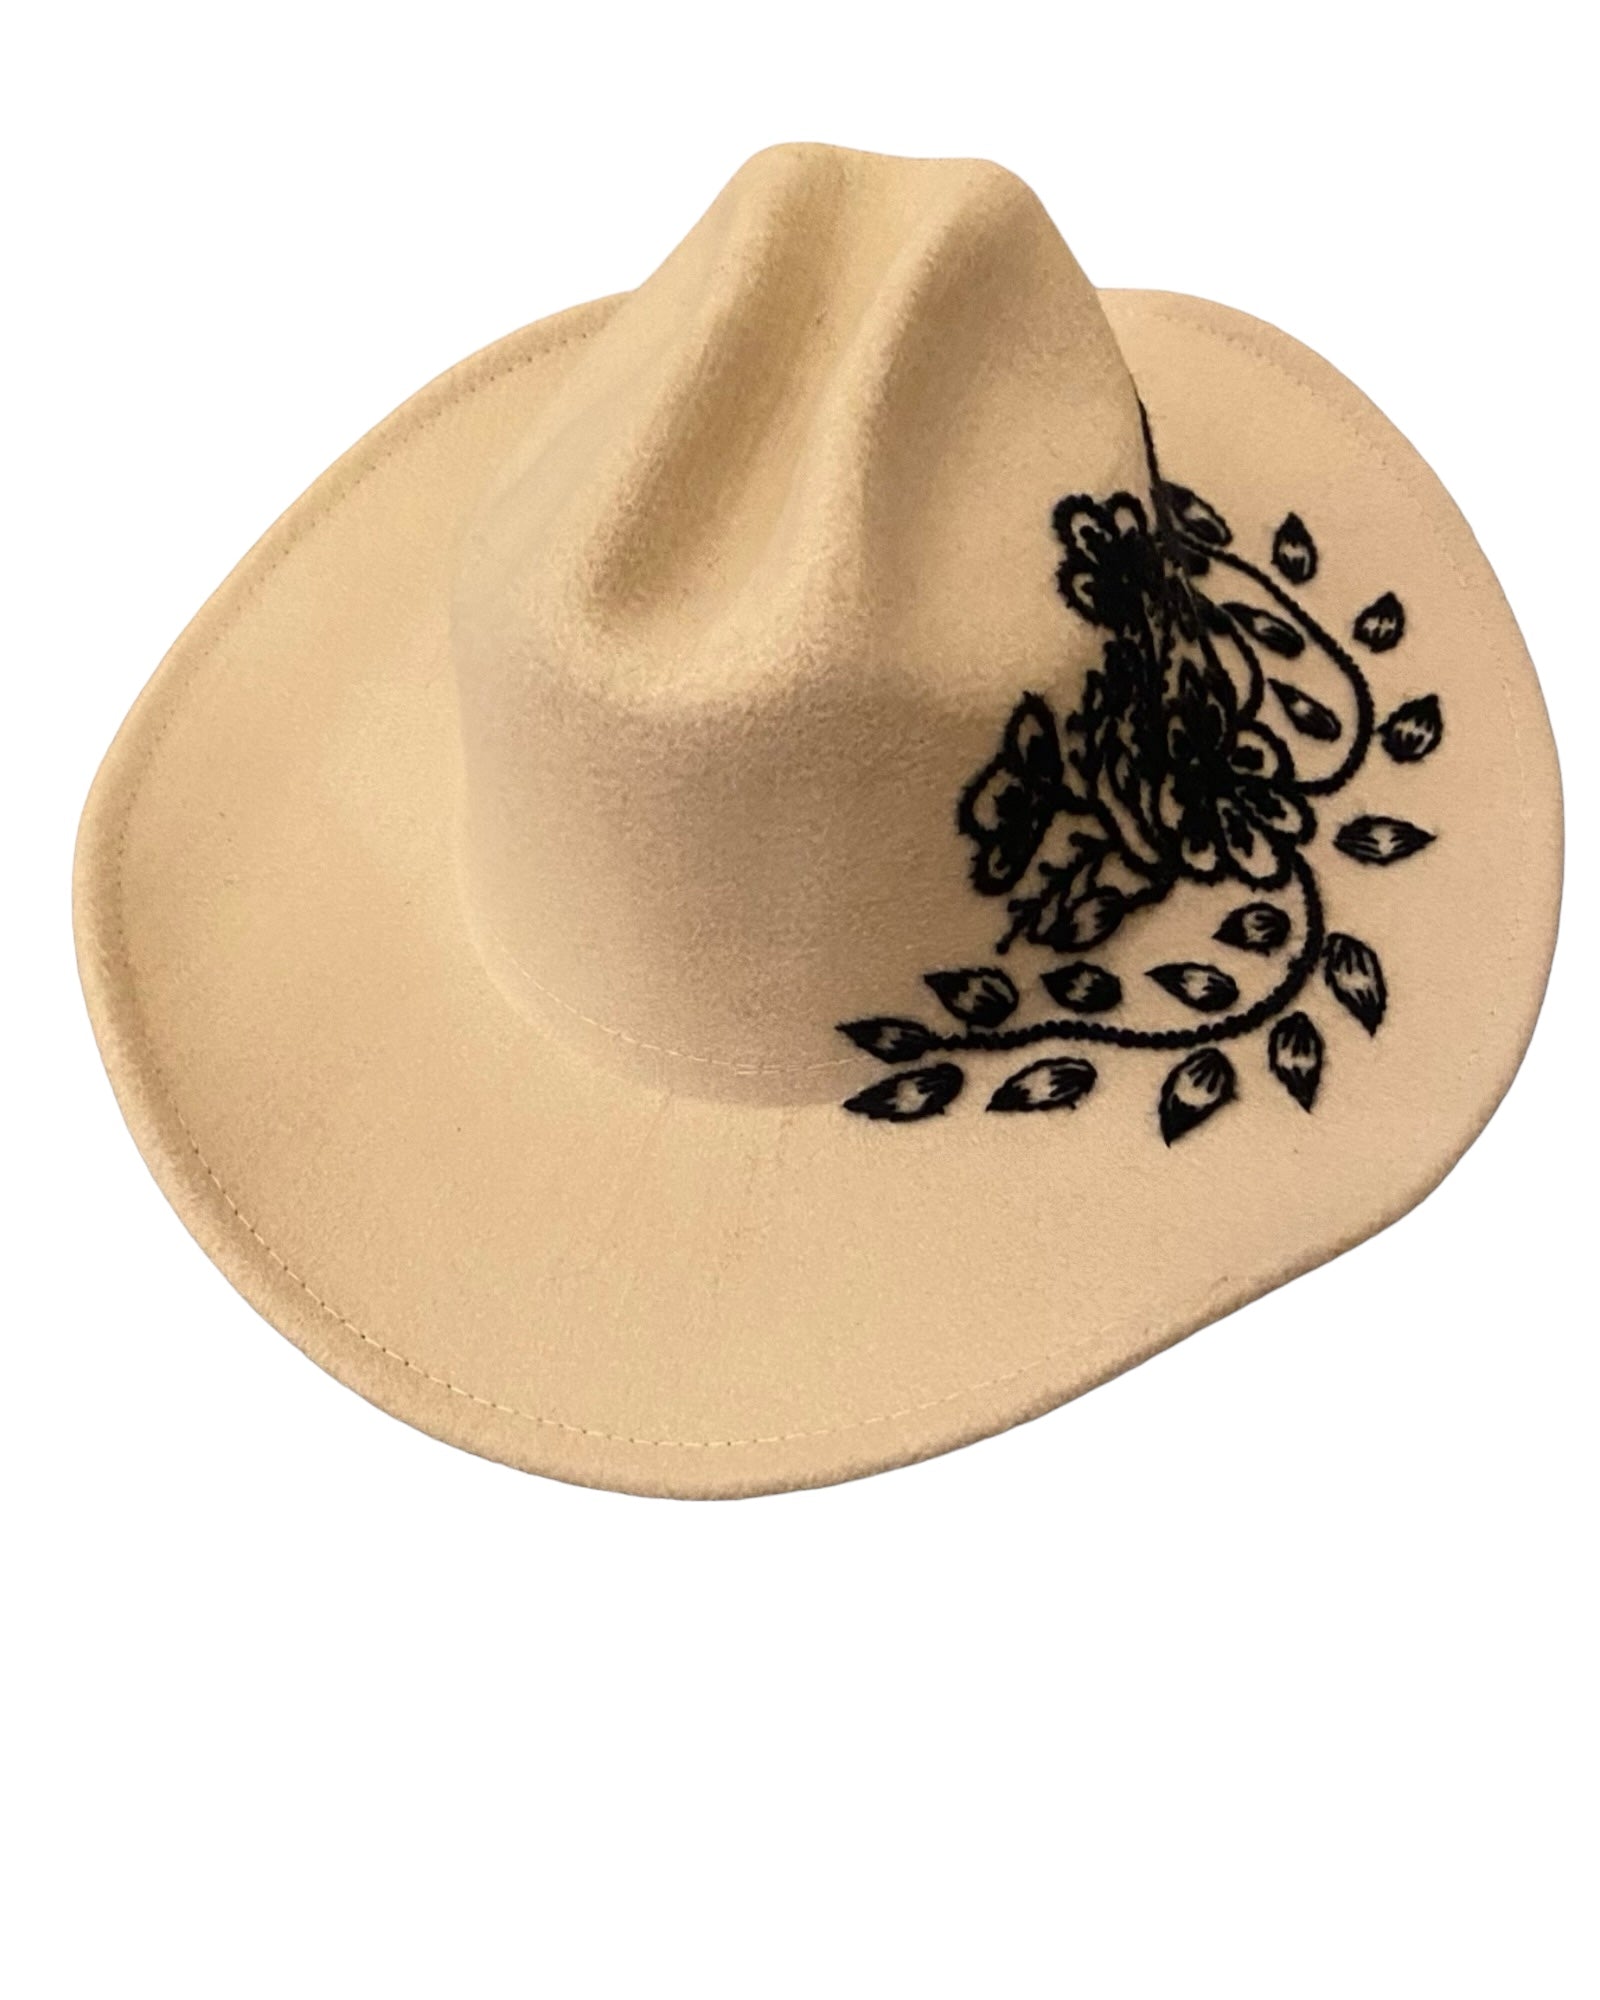 Austin Cowboy Hat Navy Embroidered